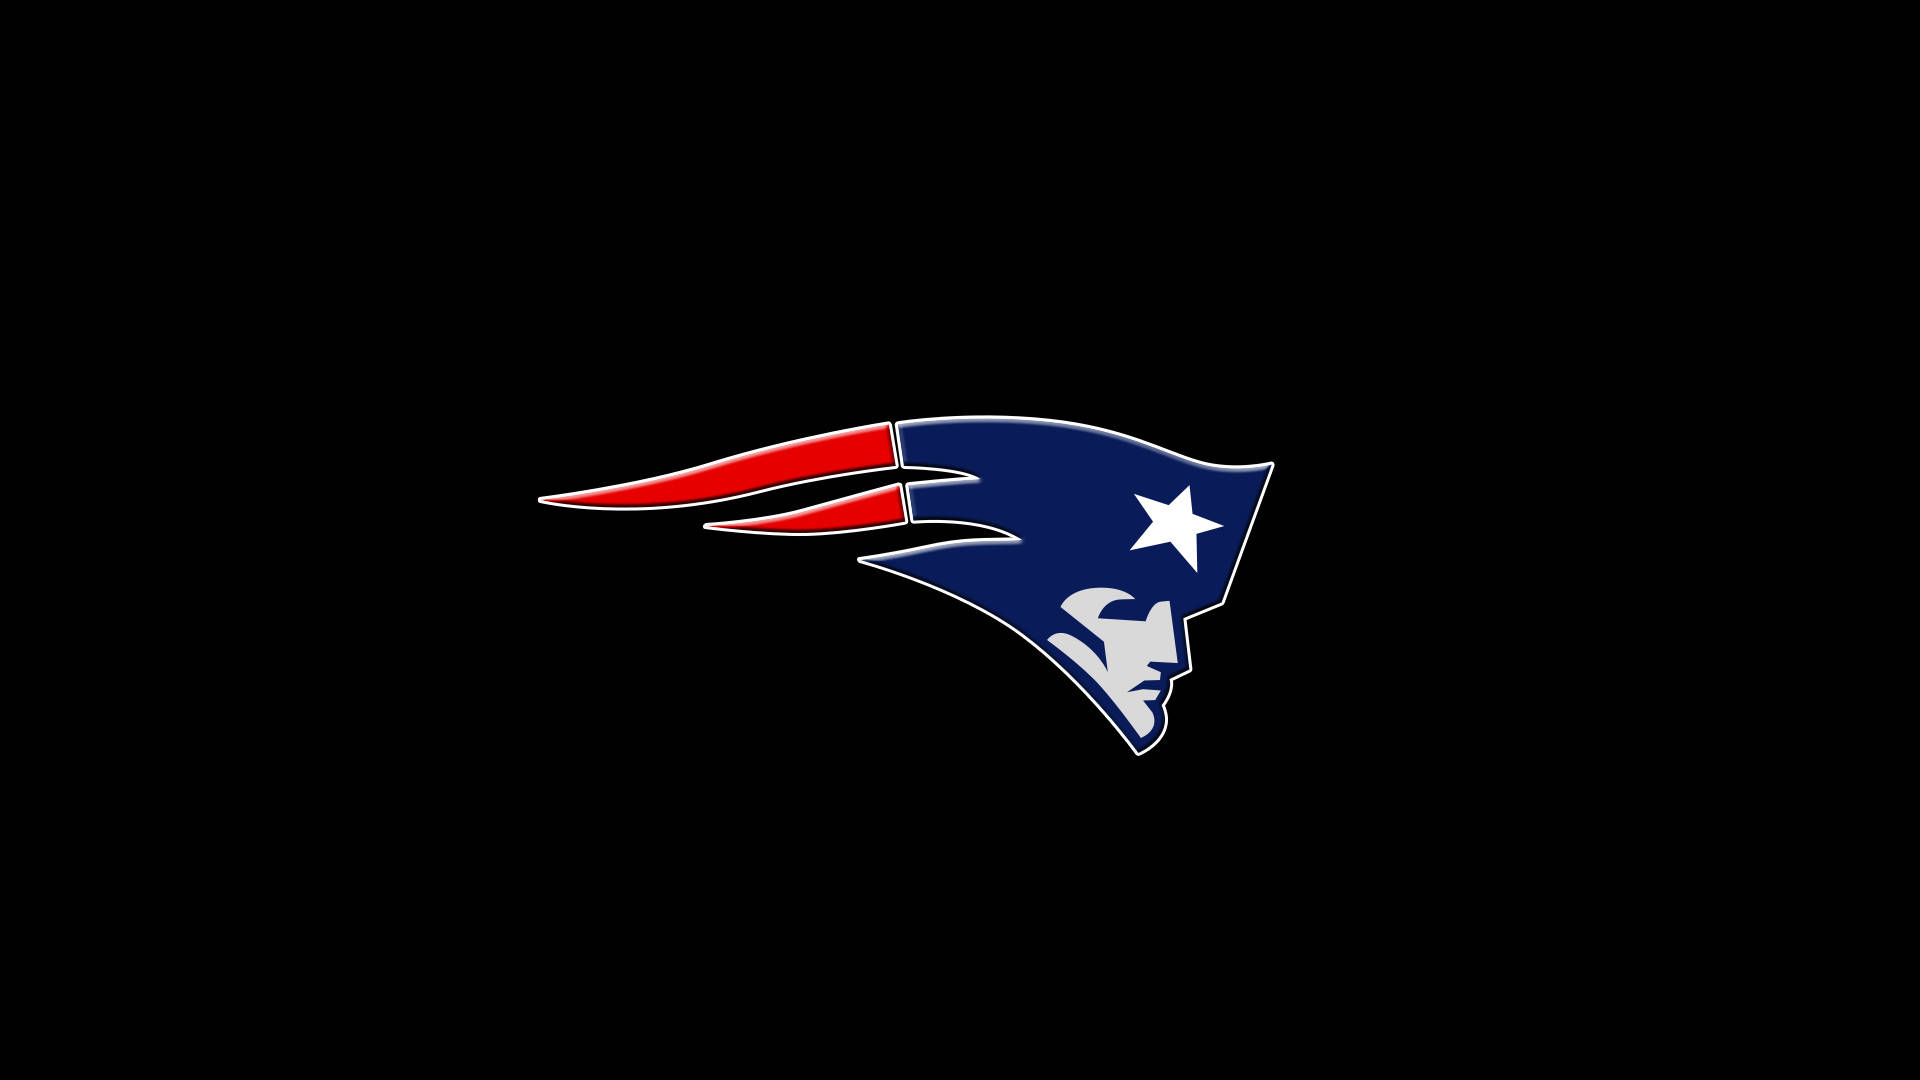 Nfl Patriots Logo On Black Background Background